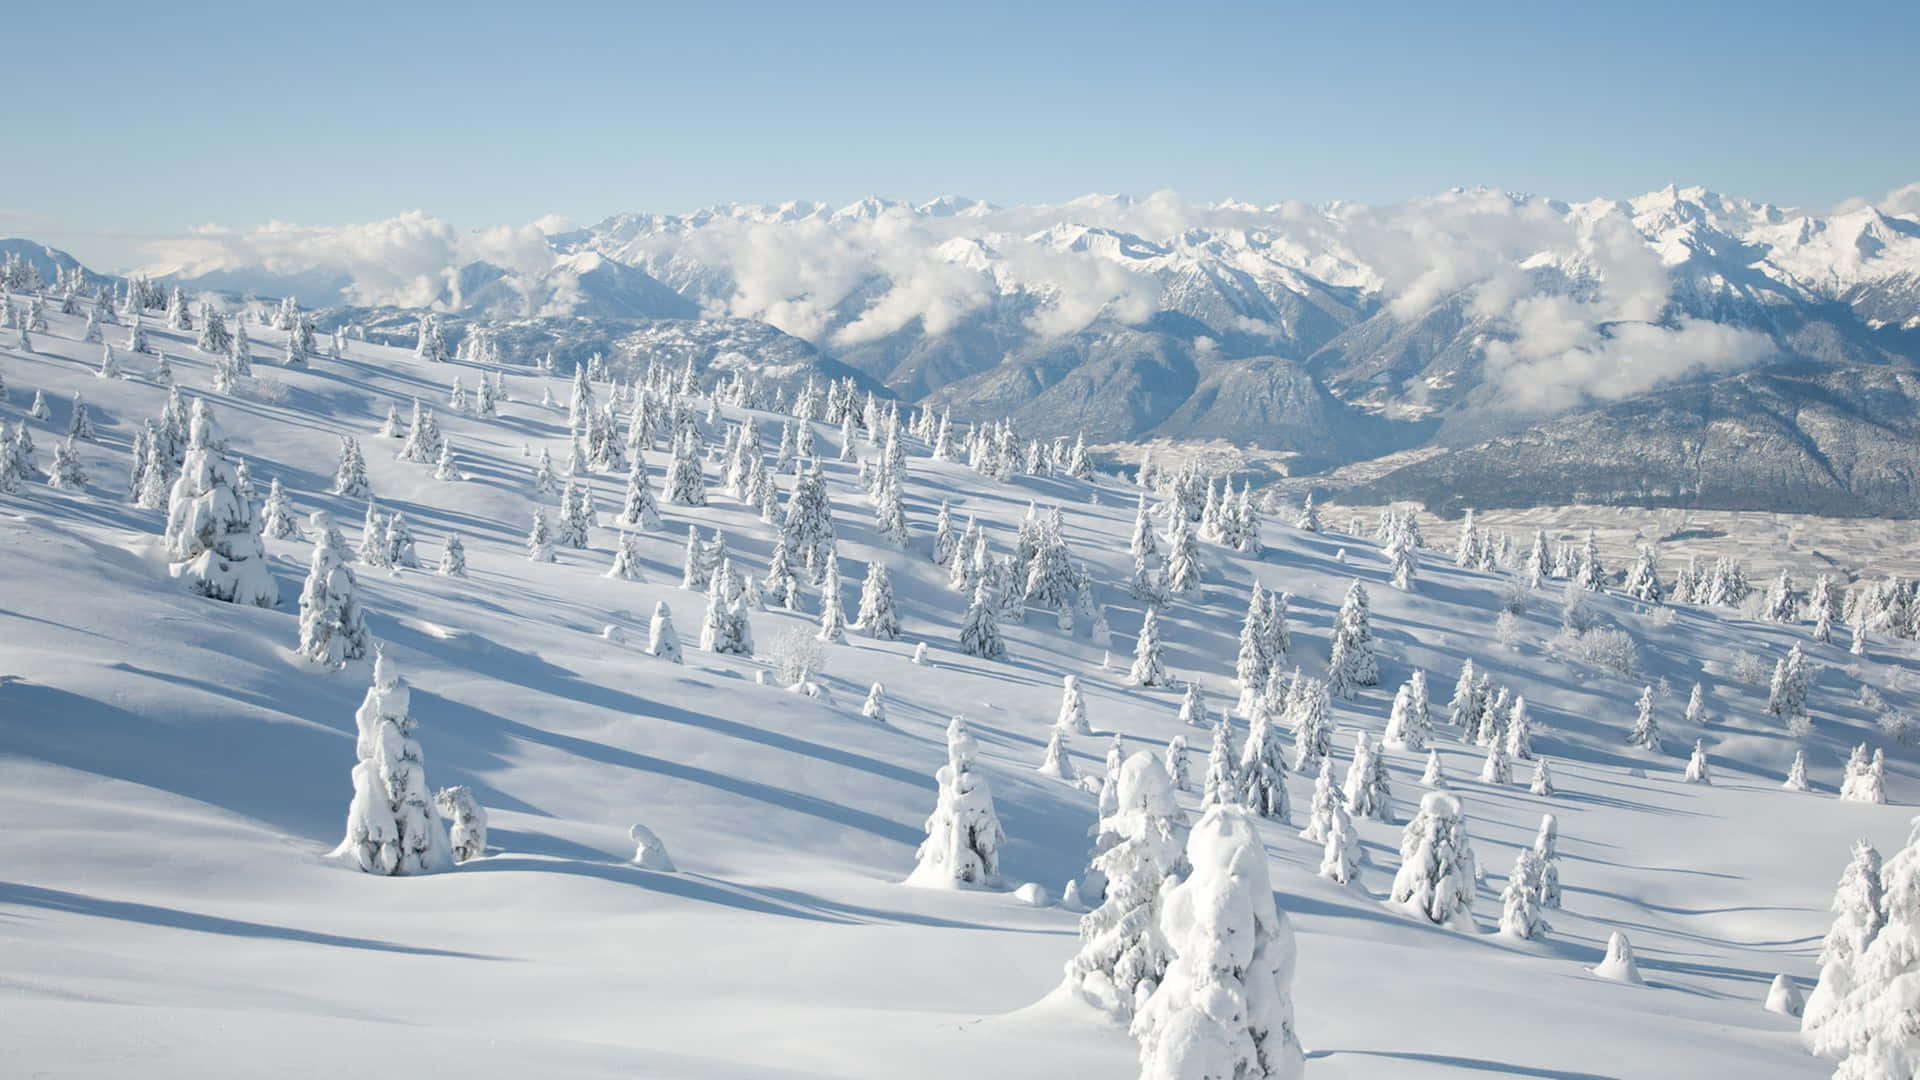 Enjoy this beautiful winter wonderland captured in 4K Wallpaper